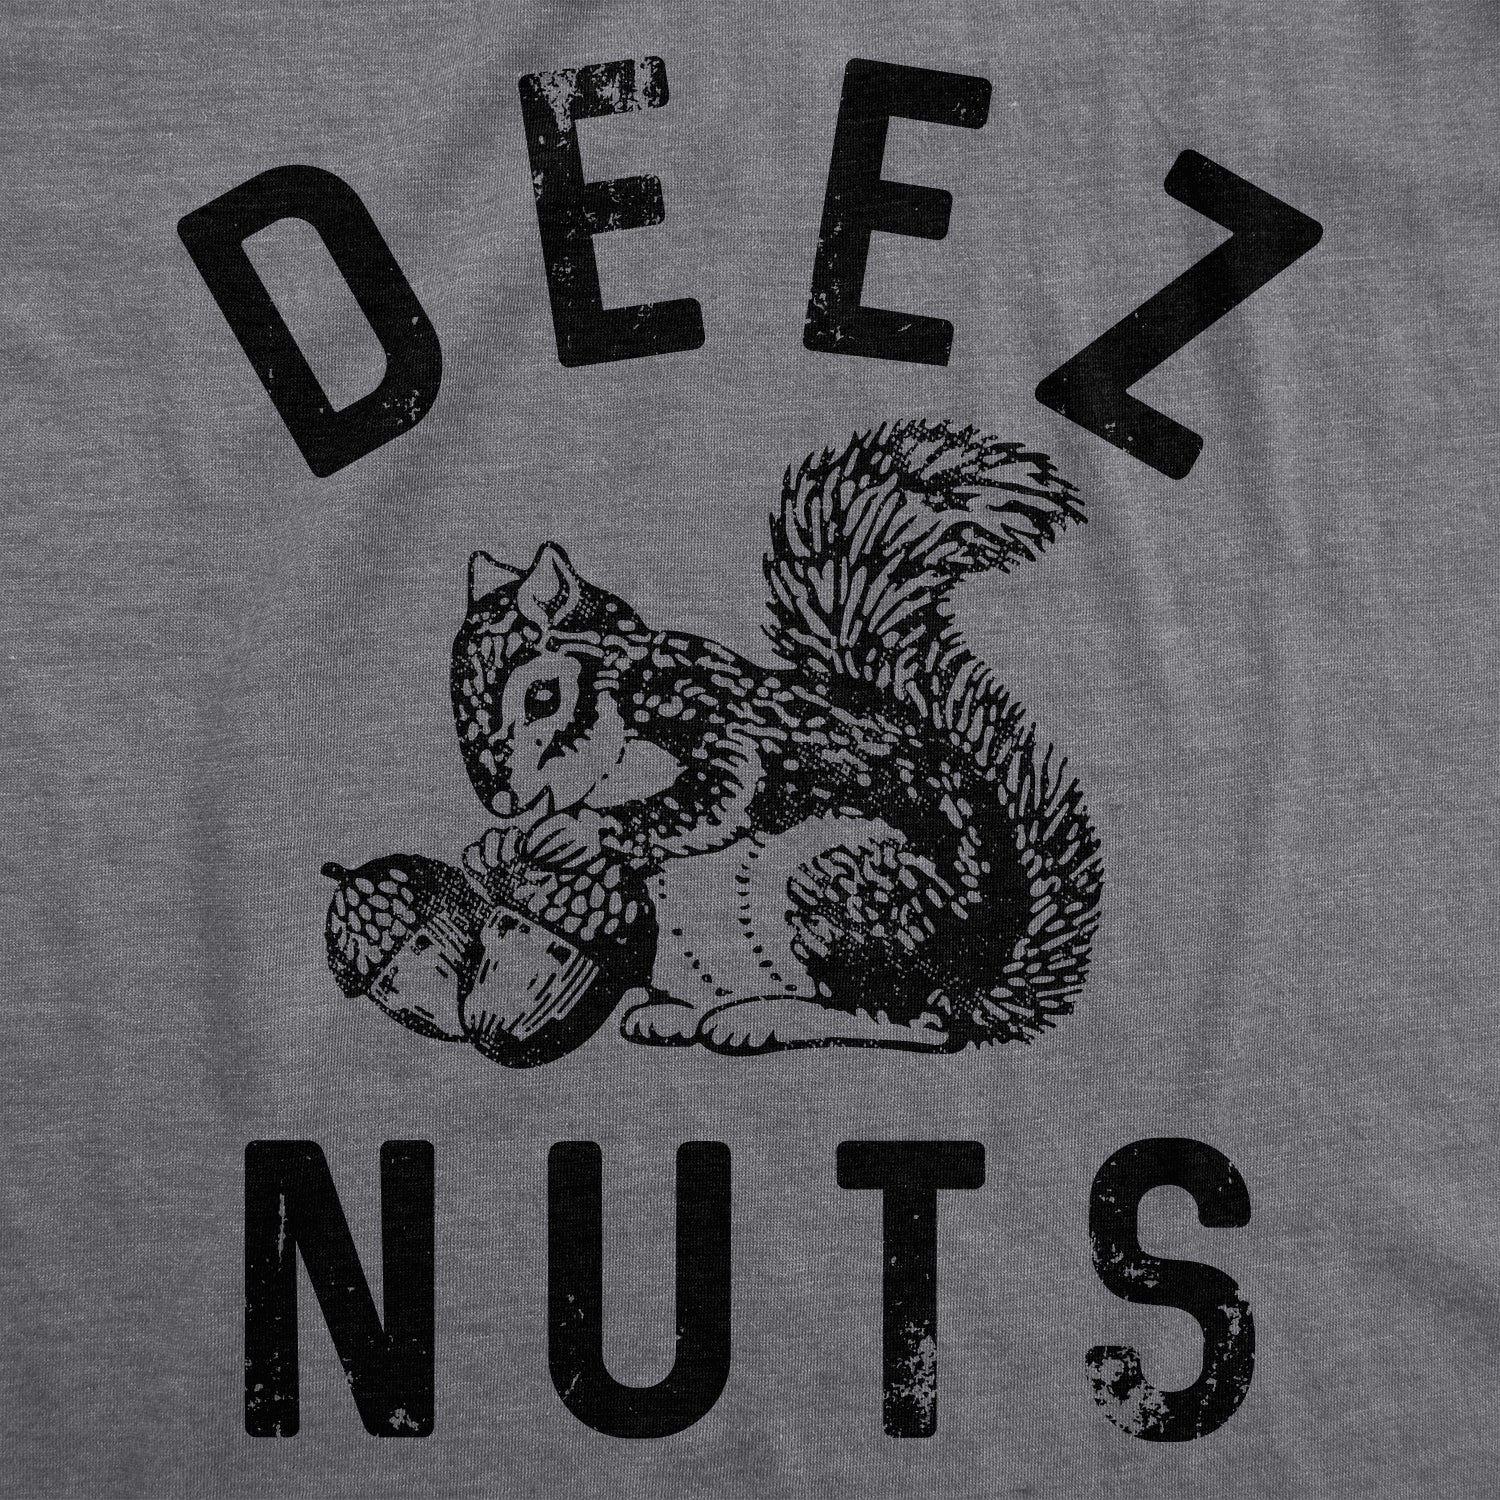 Funny Dark Heather Grey - DEEZ Deez Nuts Squirrel Mens T Shirt Nerdy sarcastic Tee